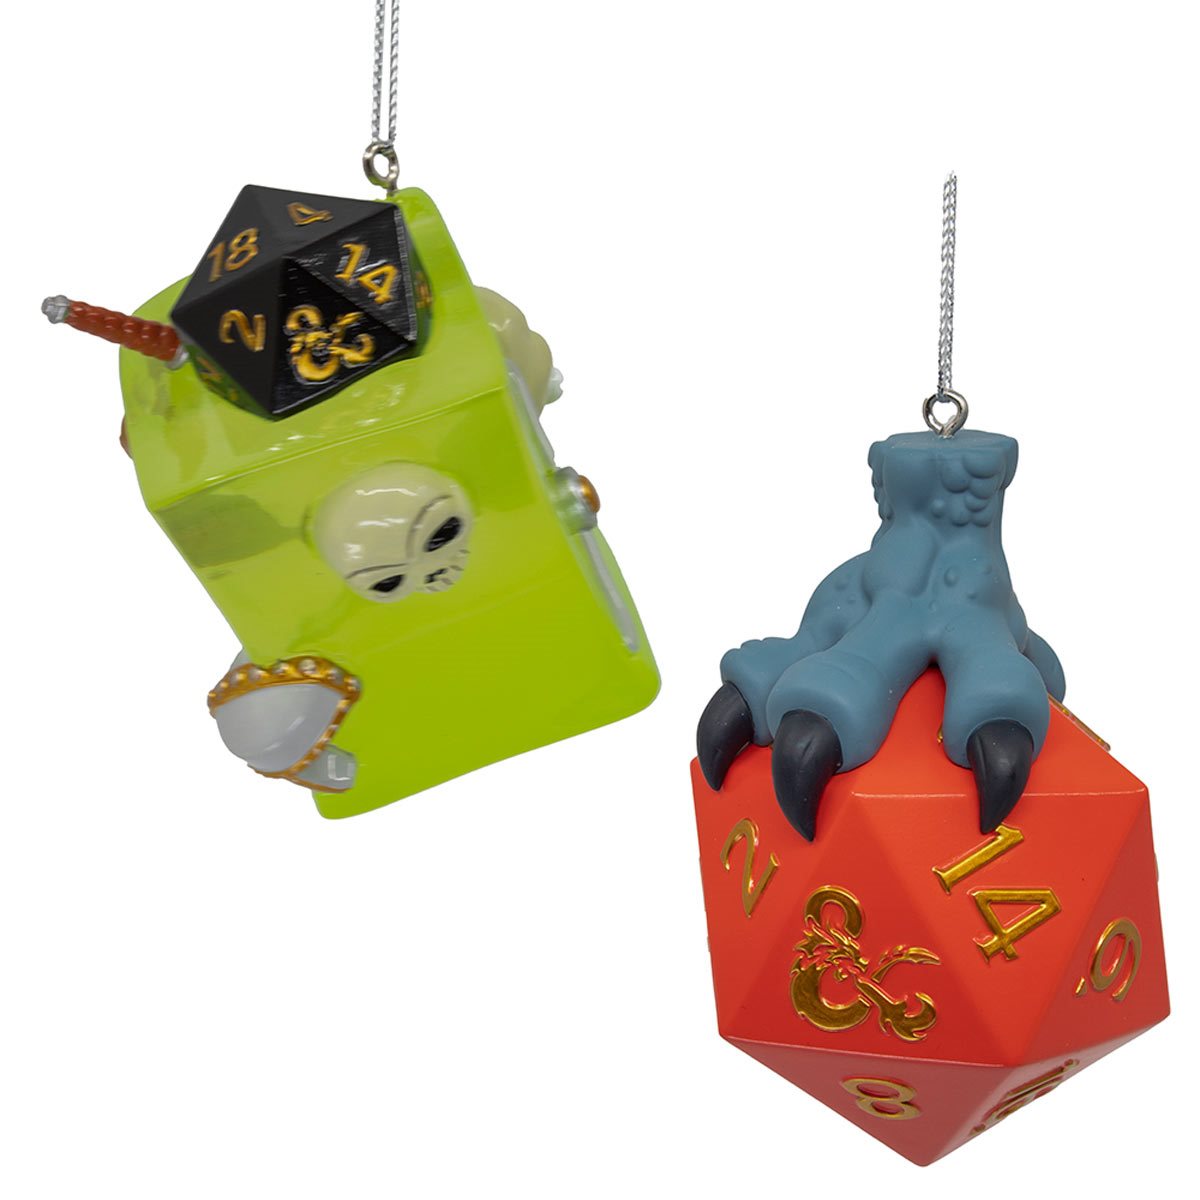 Dungeons & Dragons Ornament (Dice/Gelatinous Cube)